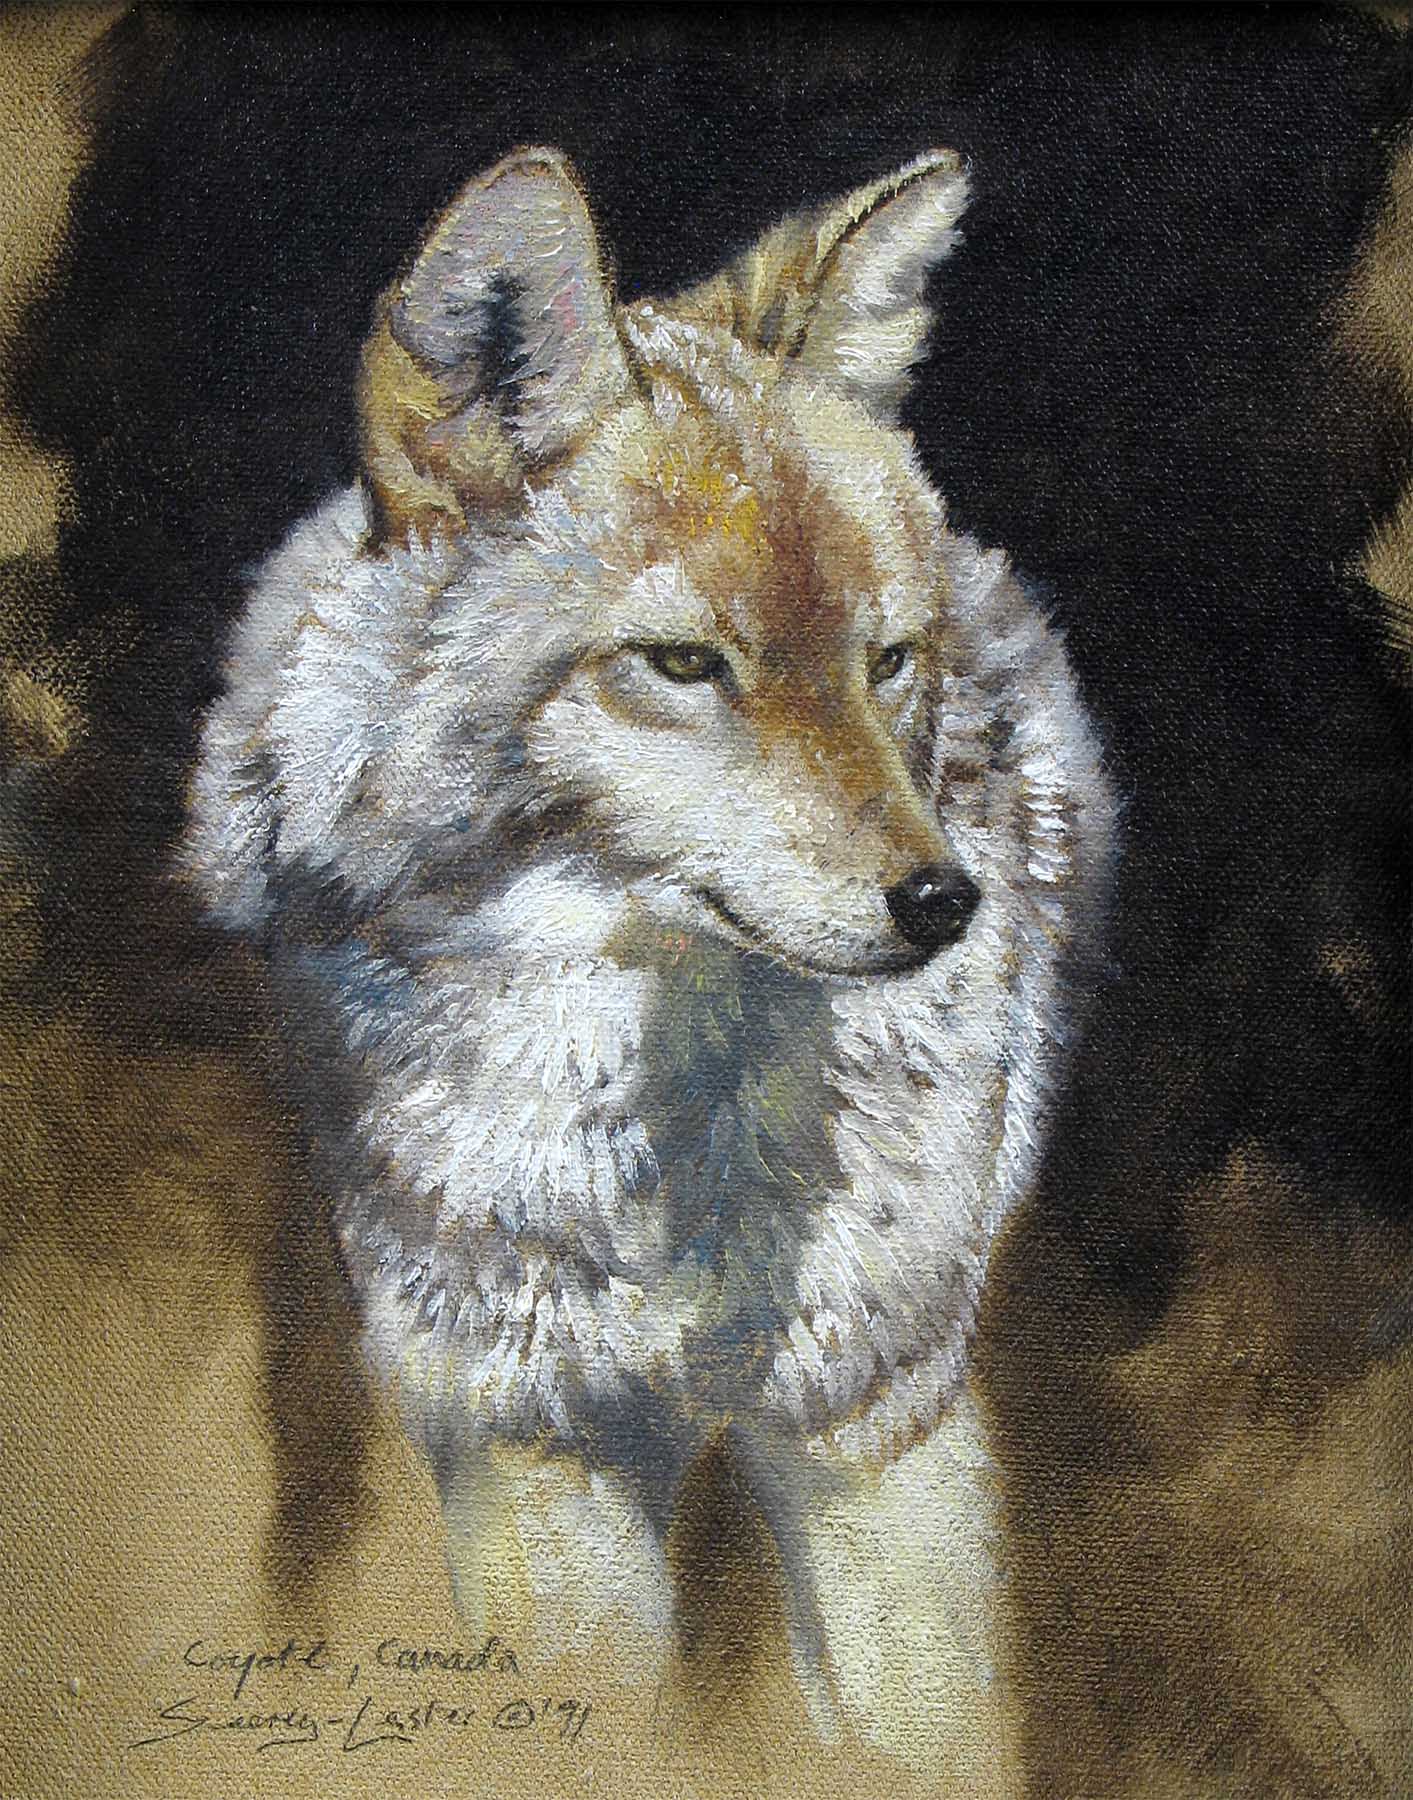 Coyote Study - John Seerey-Lester